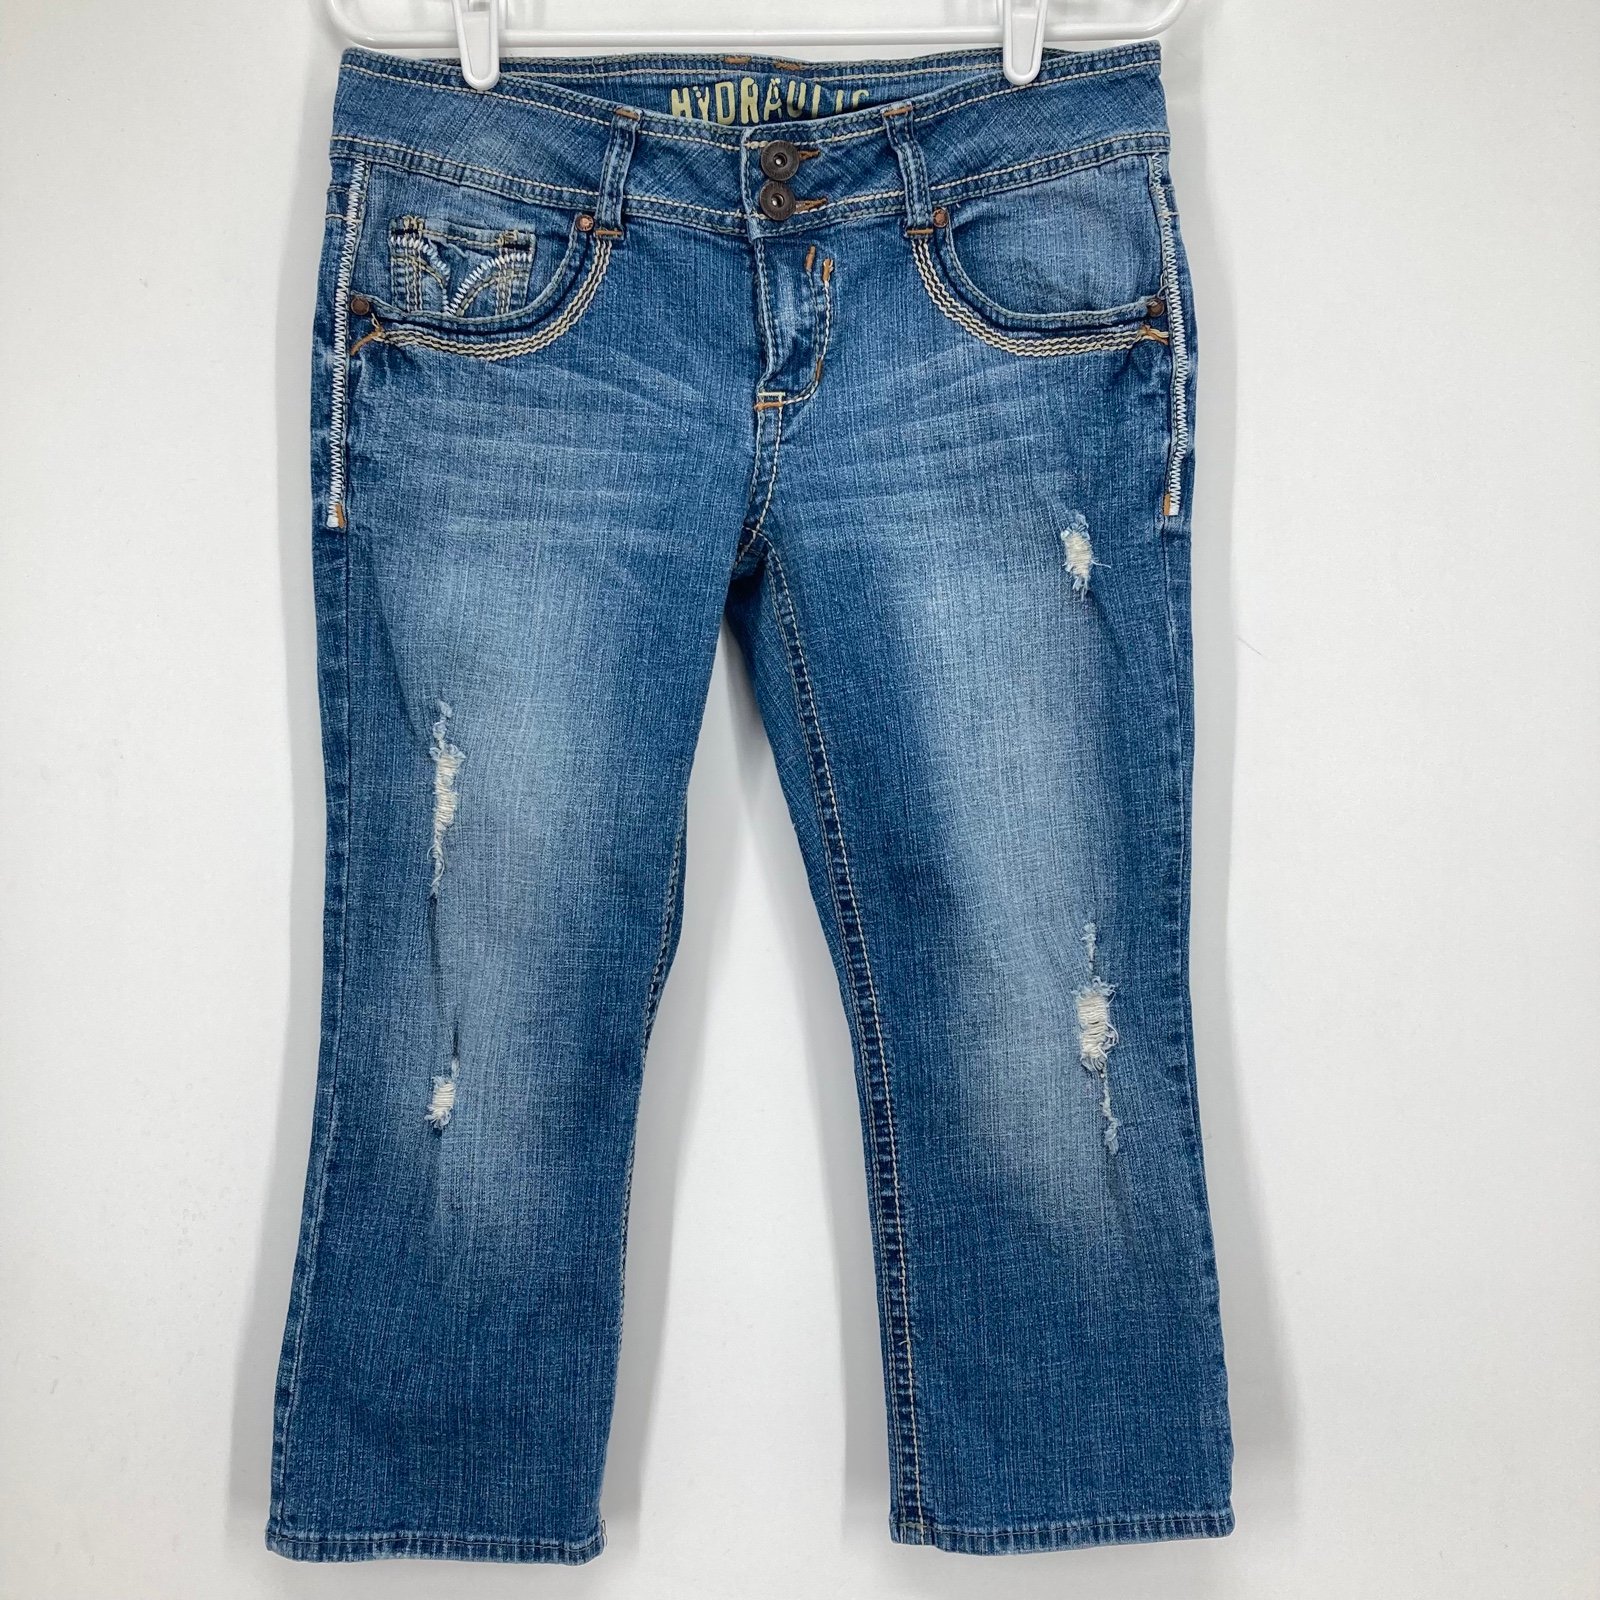 Popular Hydraulic Autentic Vintage Denim Women’s Capri Jeans fMoiSLCAe all for you